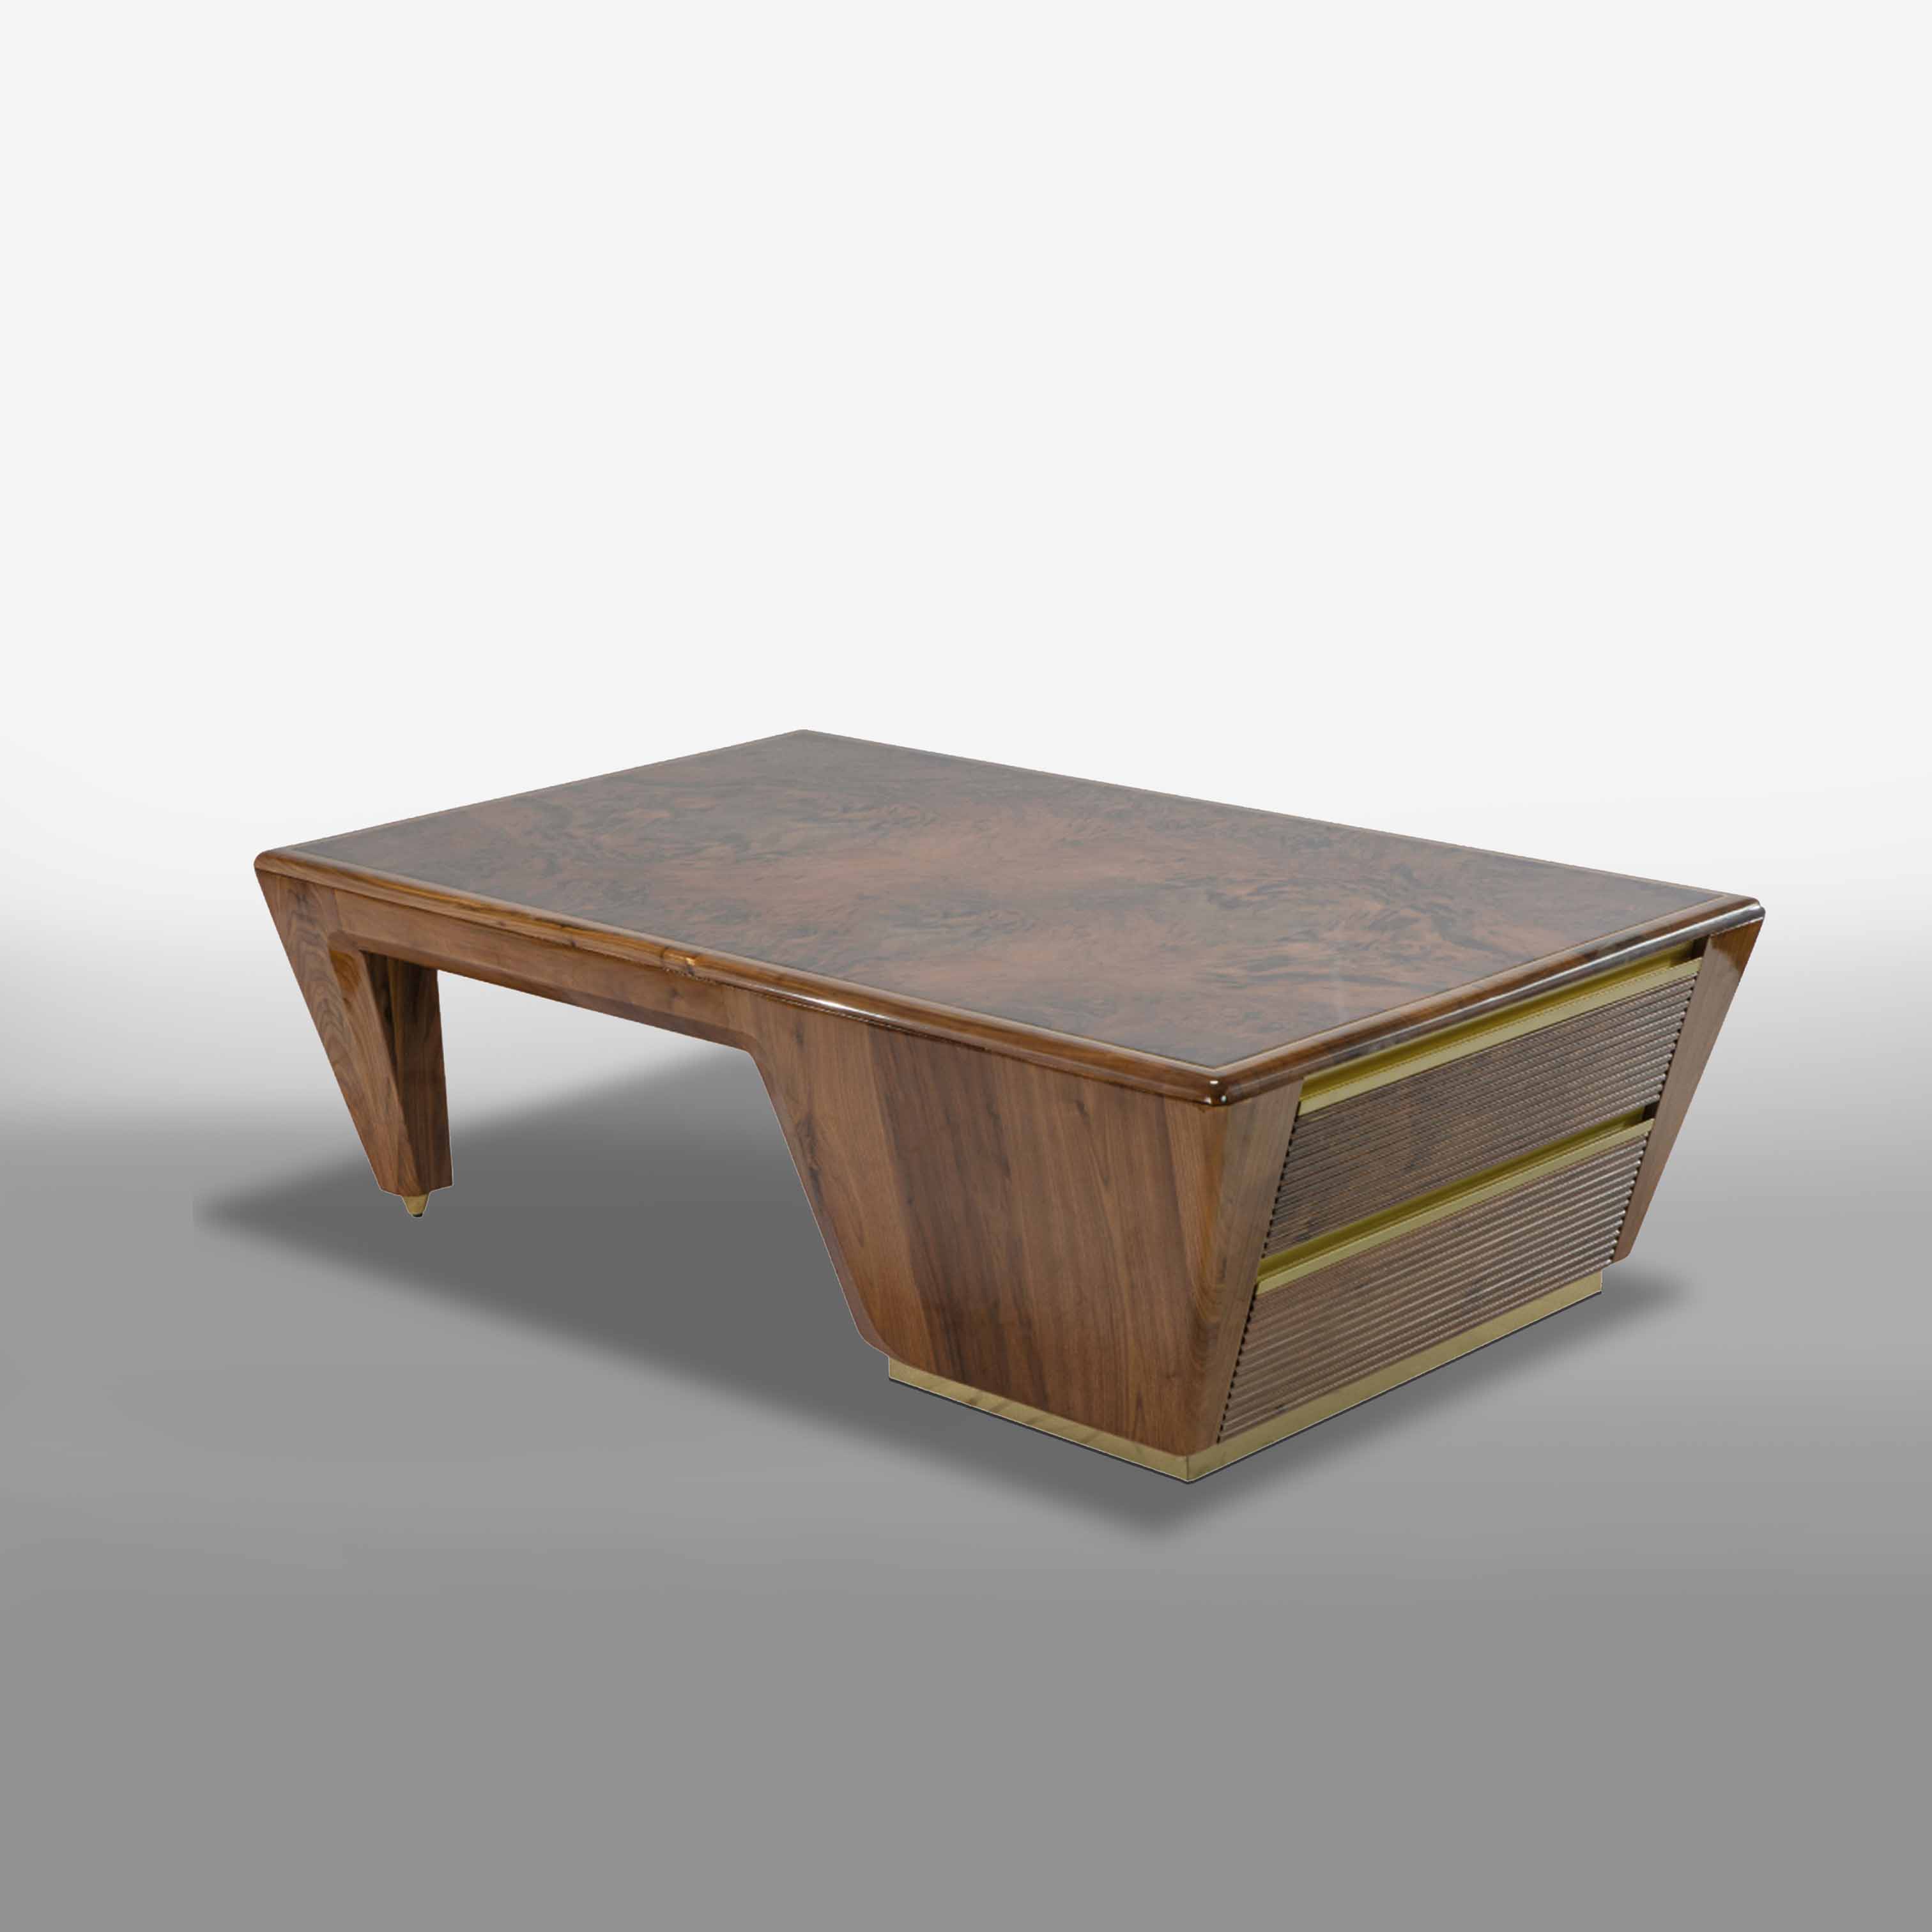 Elegant rectangular wooden table - B54LHFU